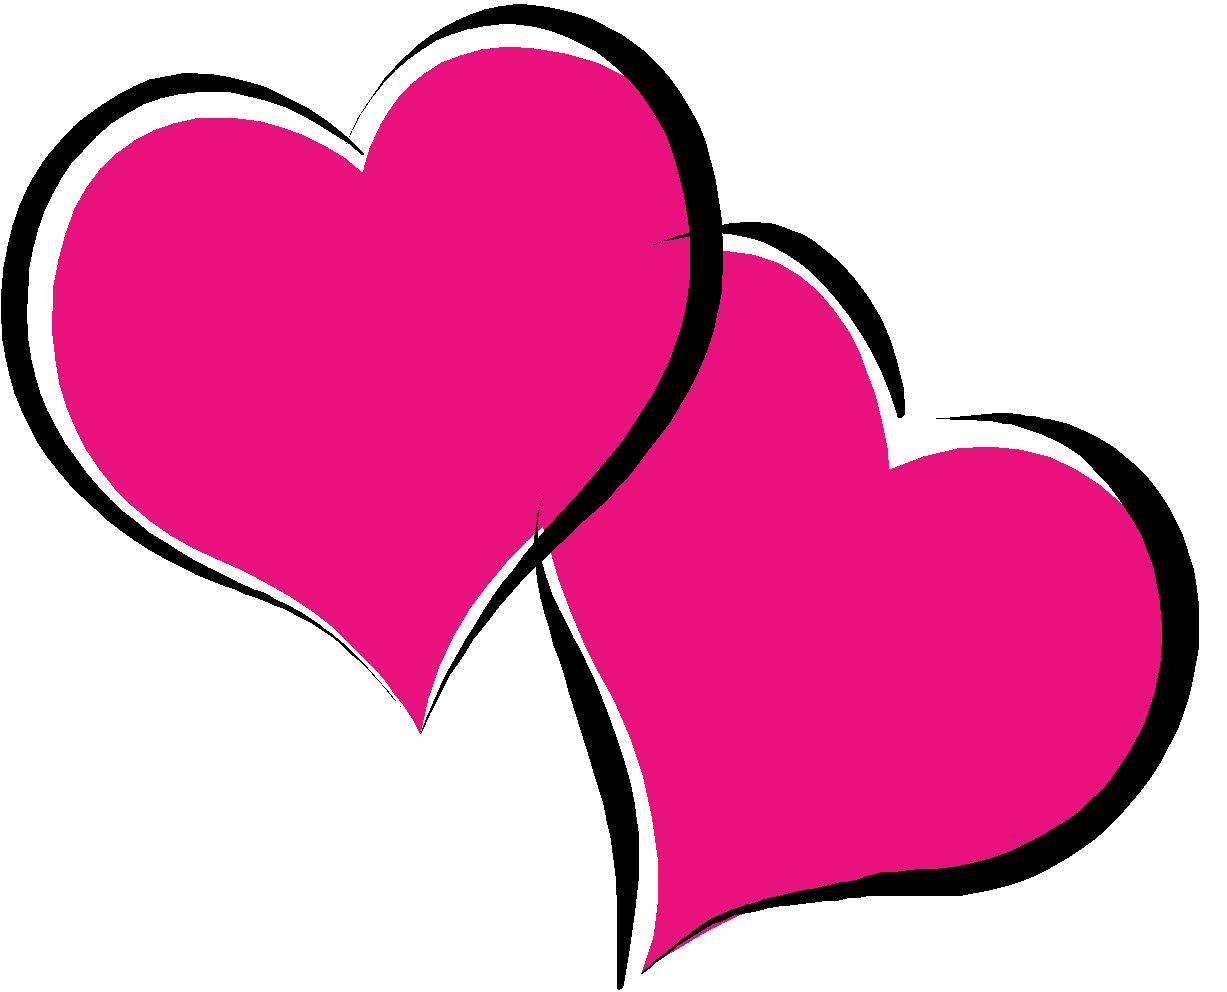 hearts-clip-art-jRiABrrcL.jpeg (1227×992) | Happy Valentines Day ...